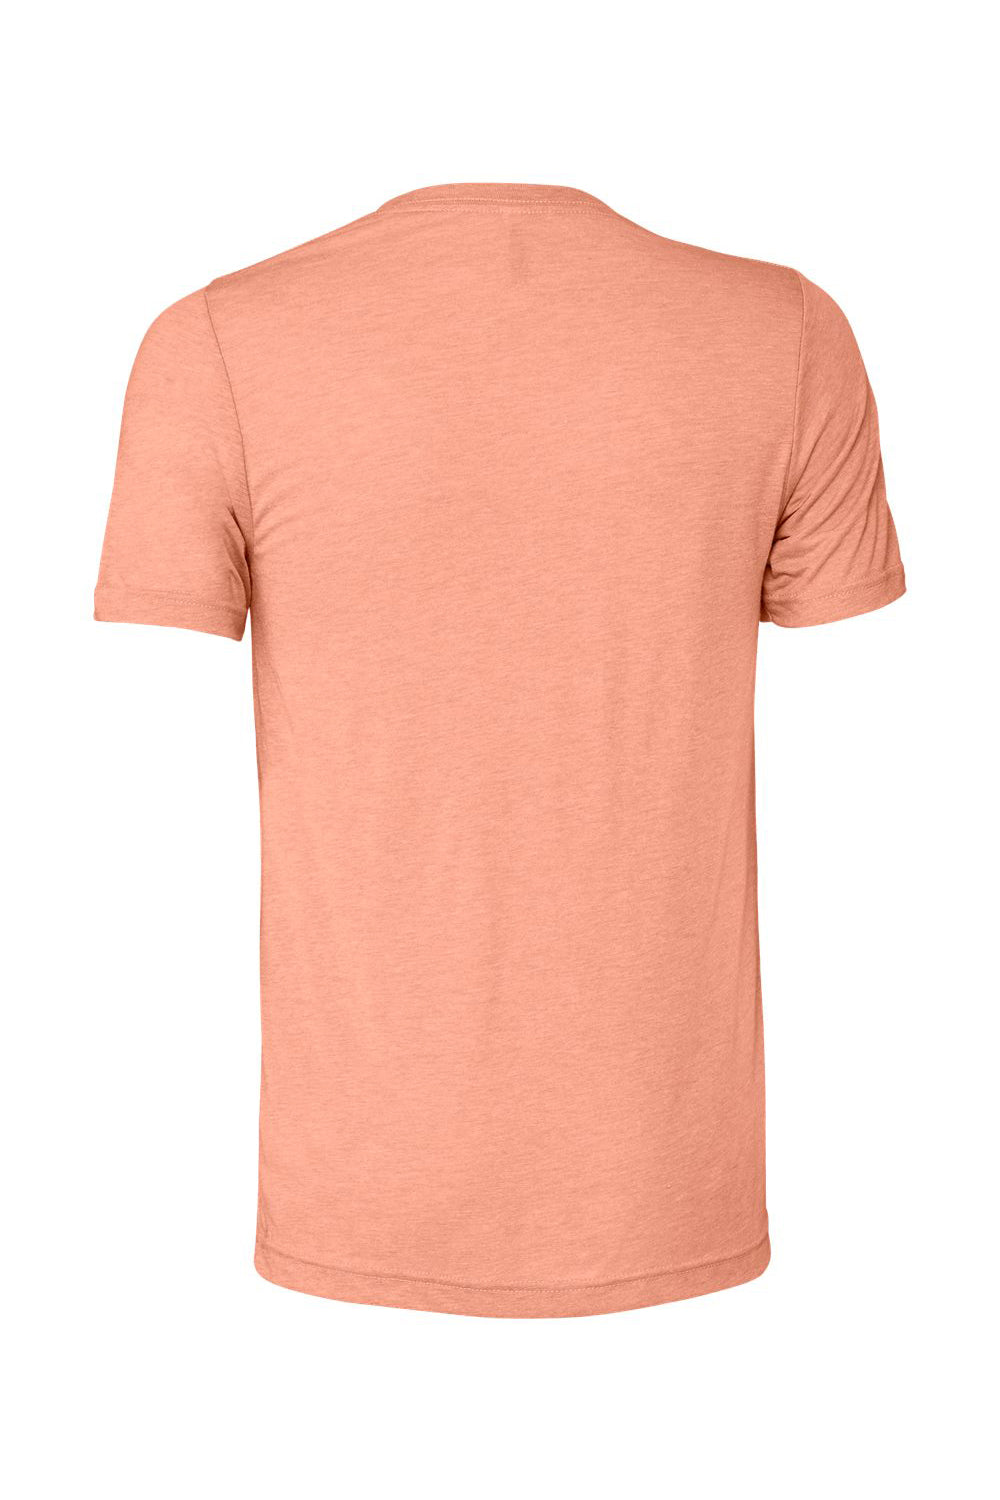 Bella + Canvas BC3413/3413C/3413 Mens Short Sleeve Crewneck T-Shirt Sunset Orange Flat Back